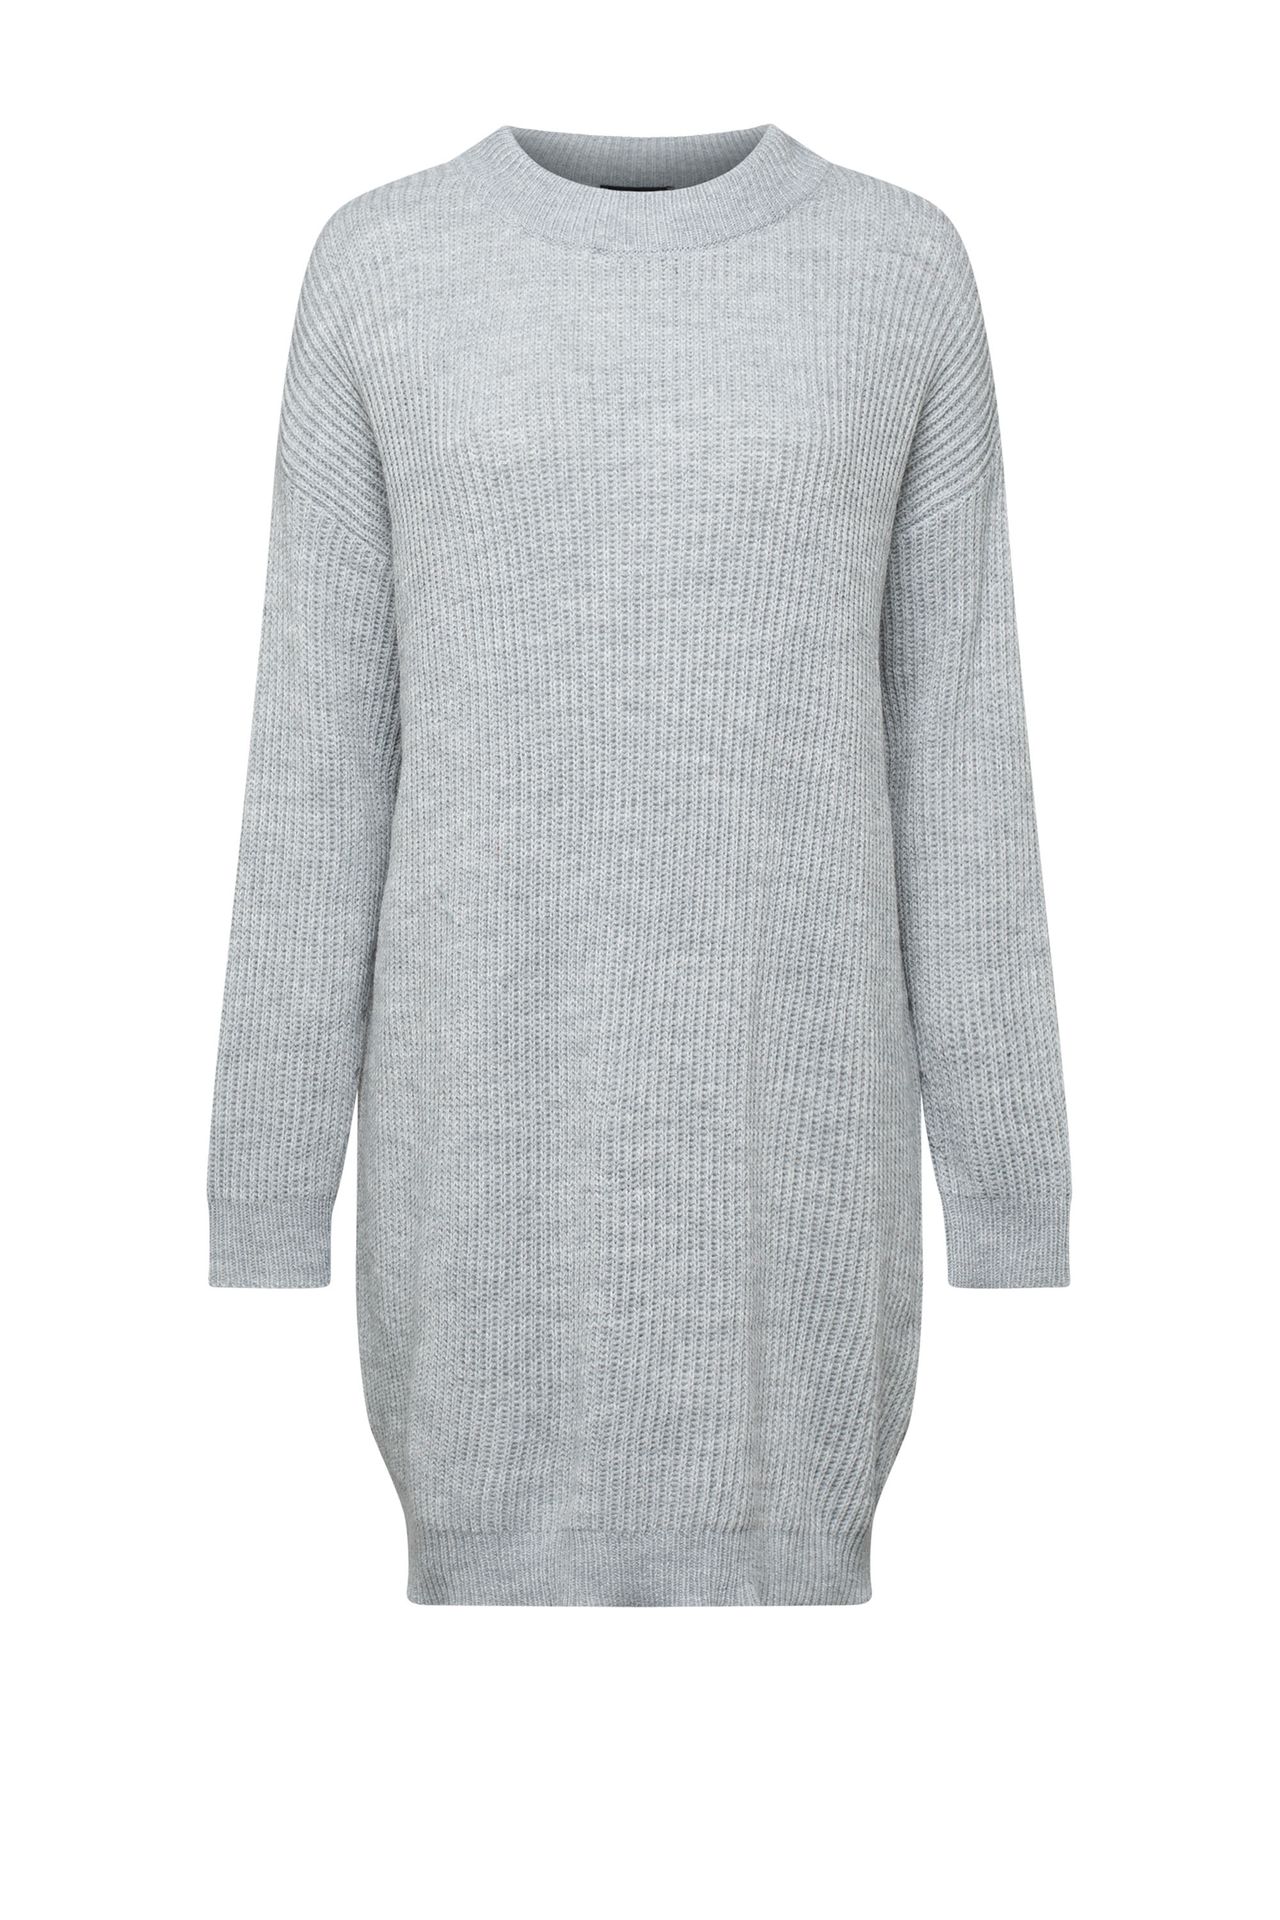  Gebreide jurk grijs grey melange 210481-050-48